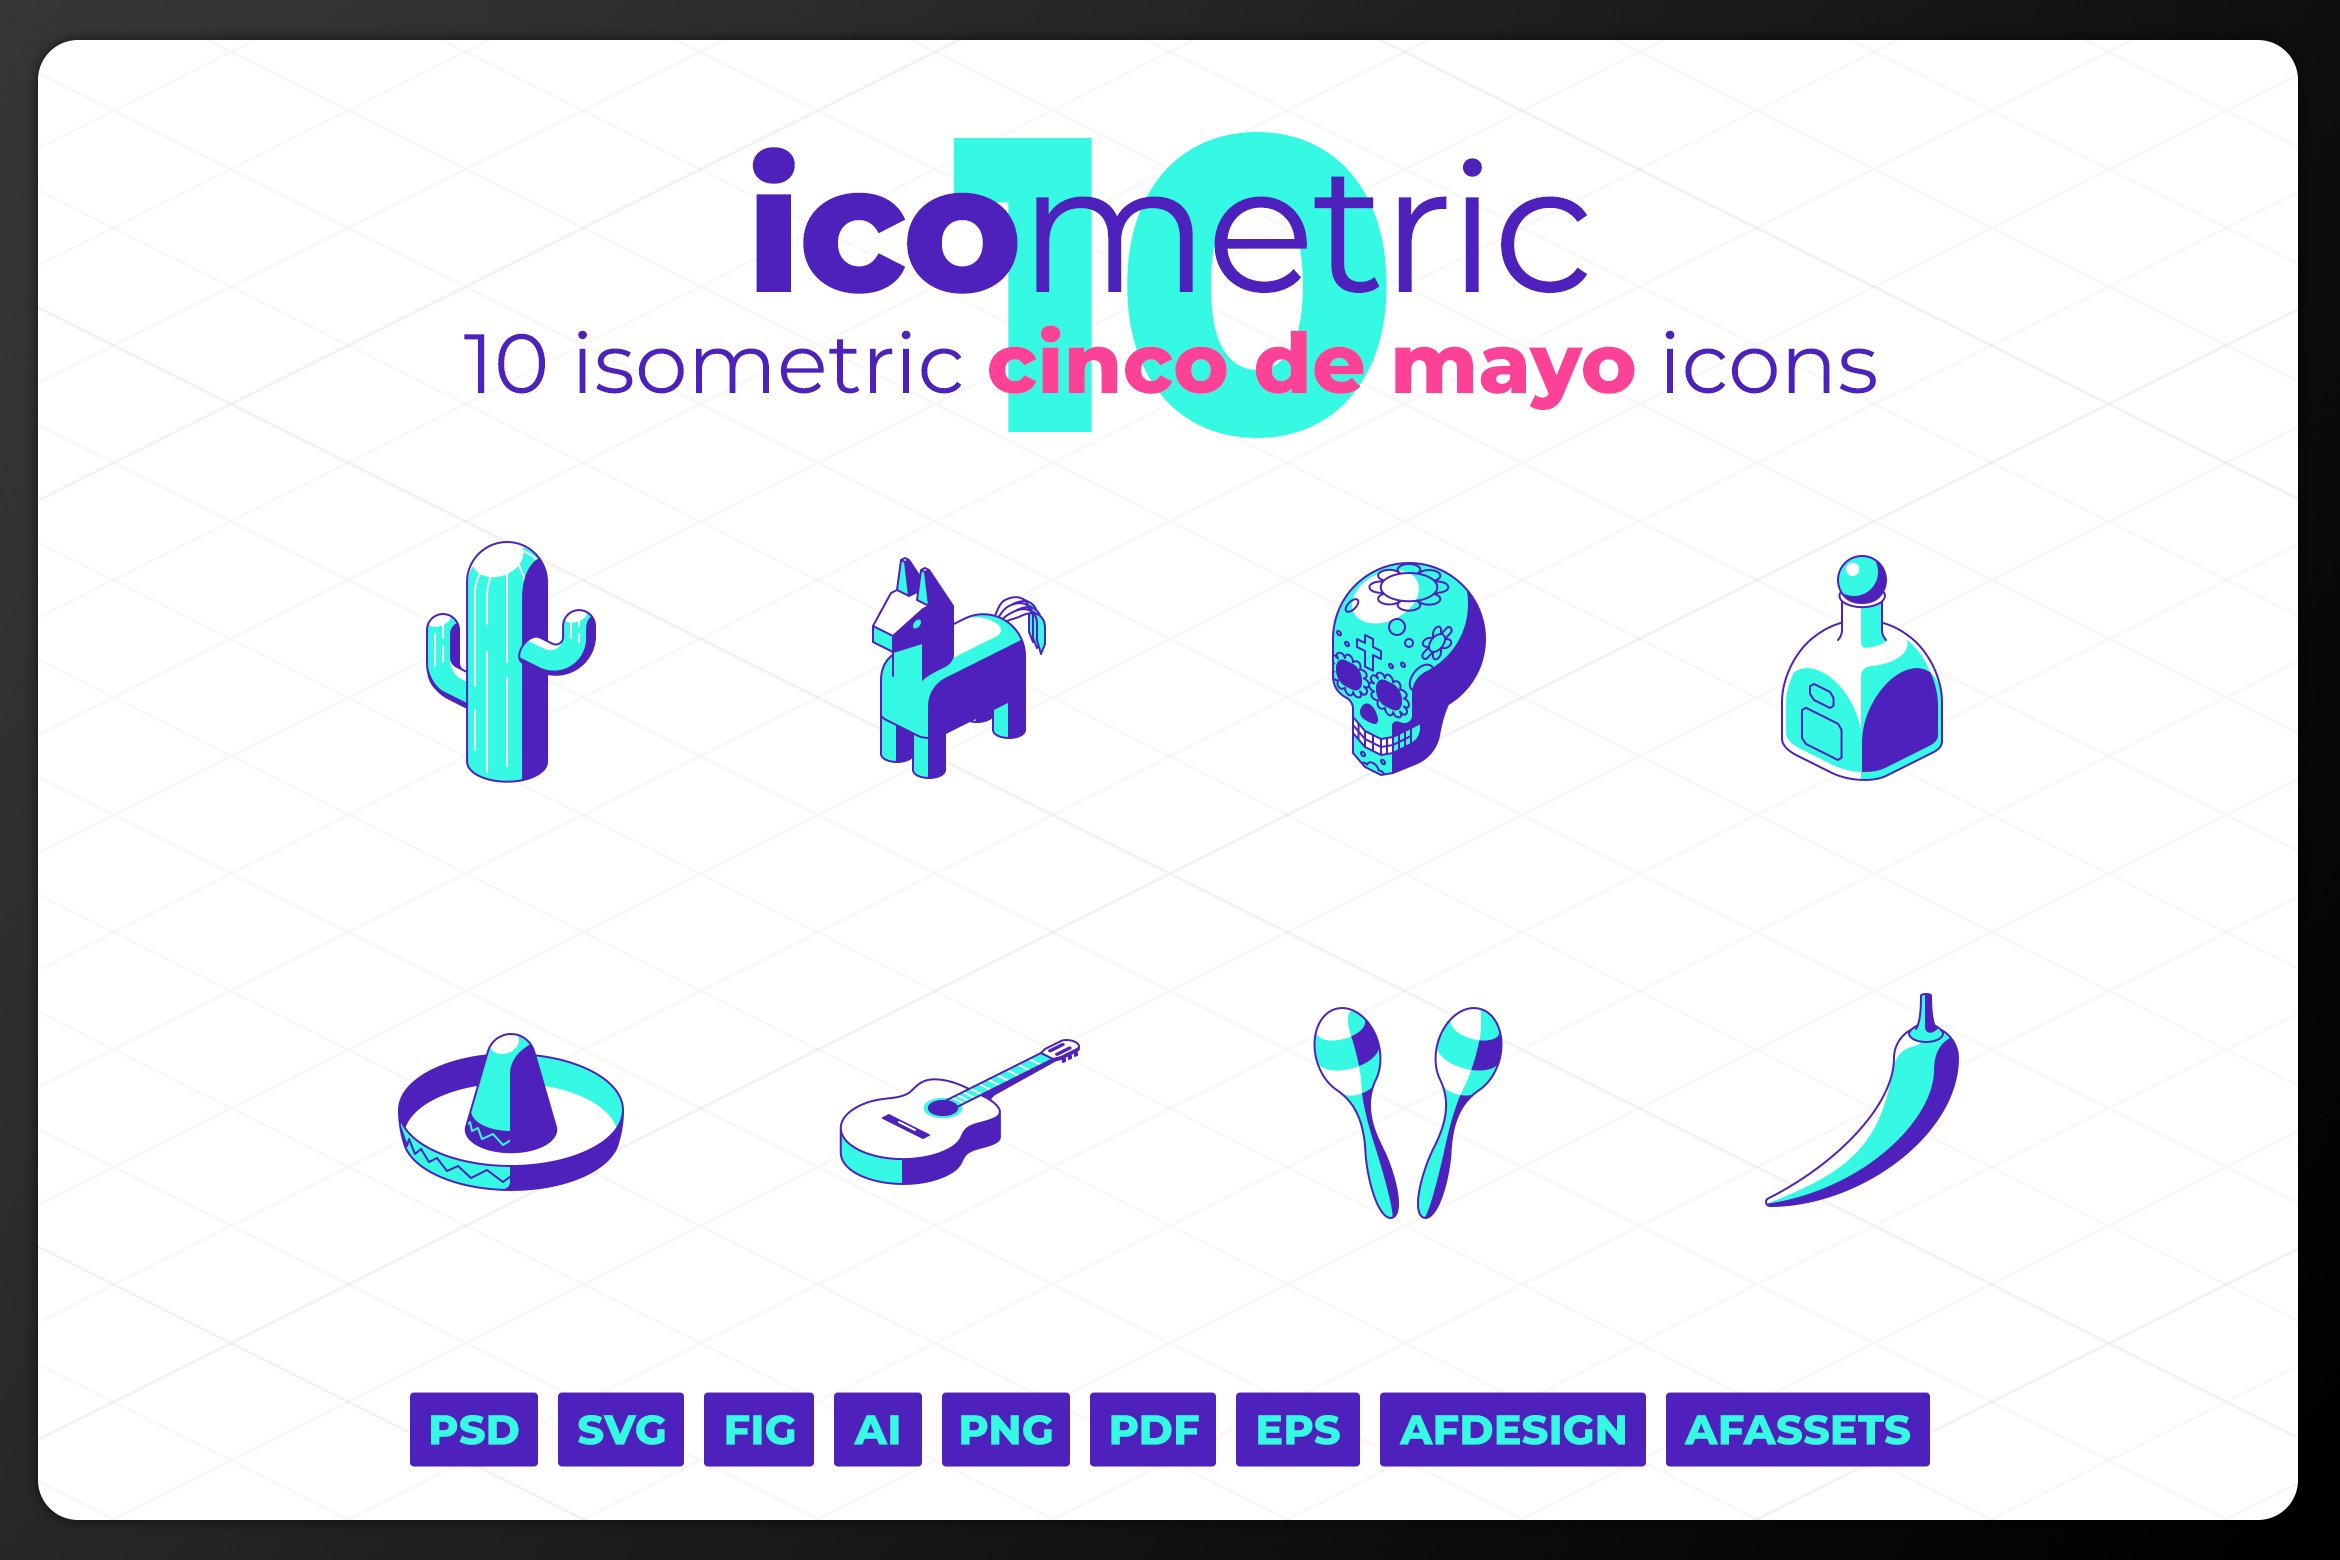 Icometric - Cinco de Mayo Icons cover image.